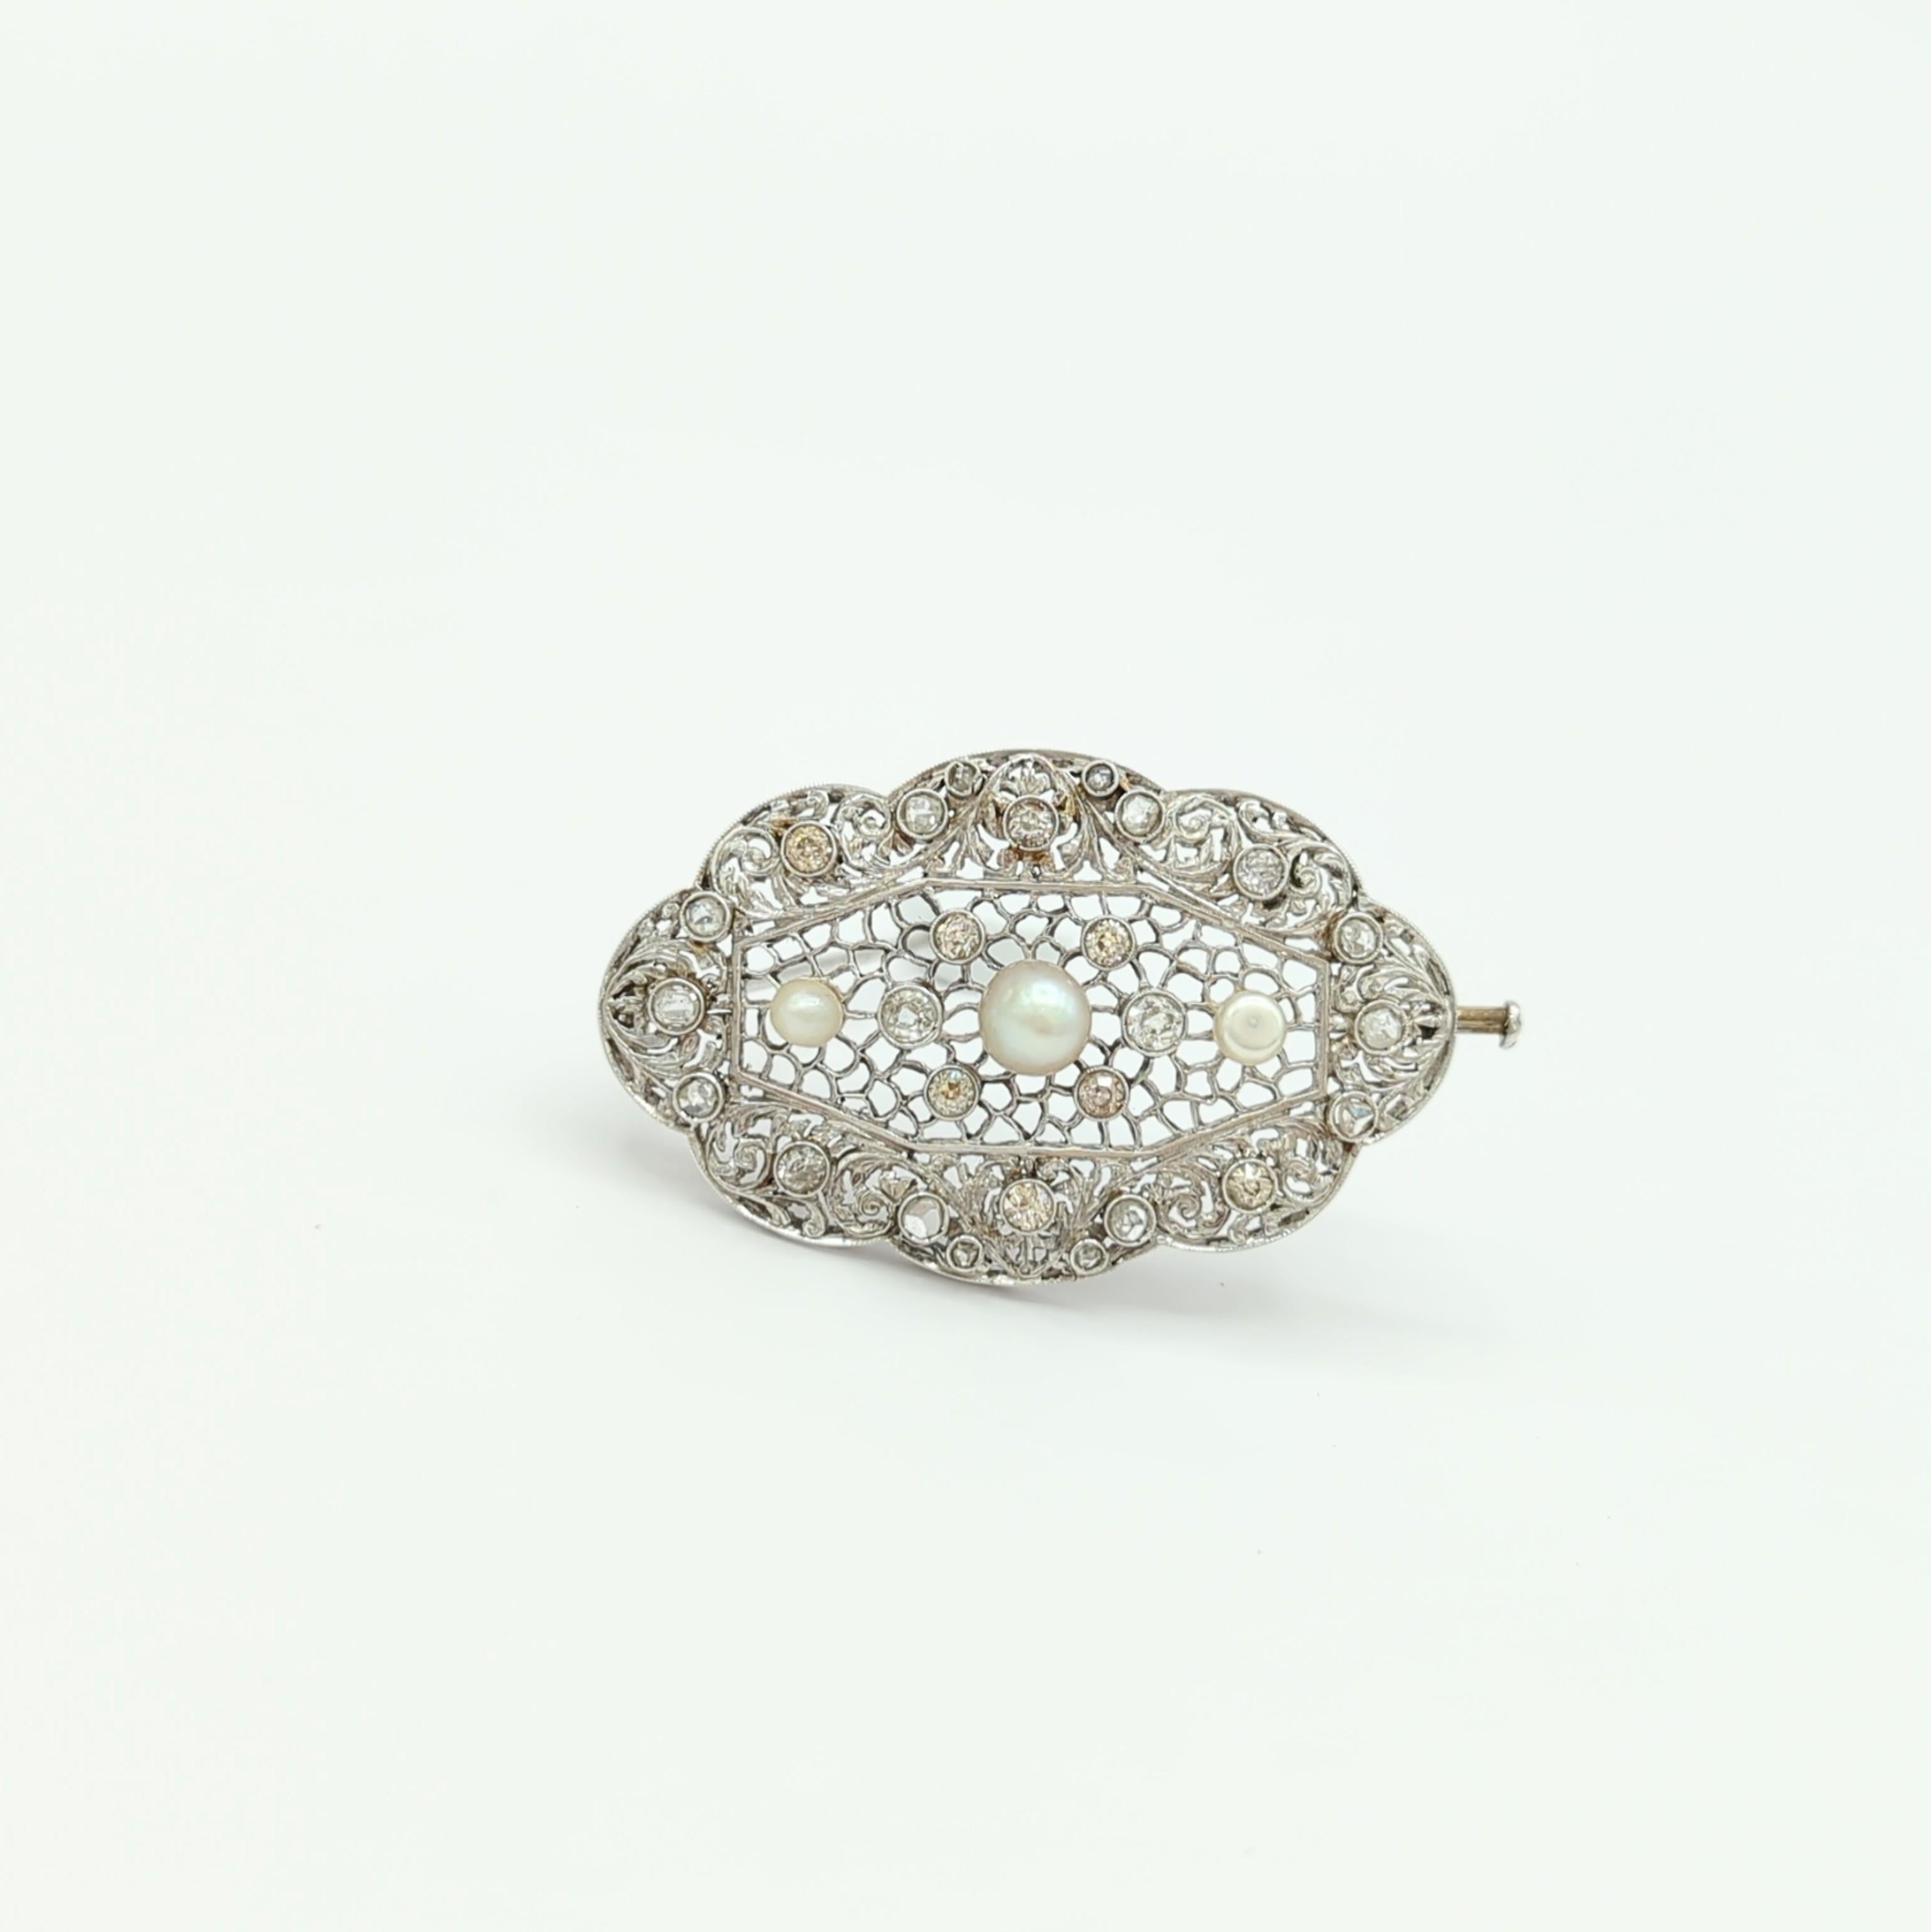 Women's or Men's White Diamond and White Pearl Brooch in 18K White Gold